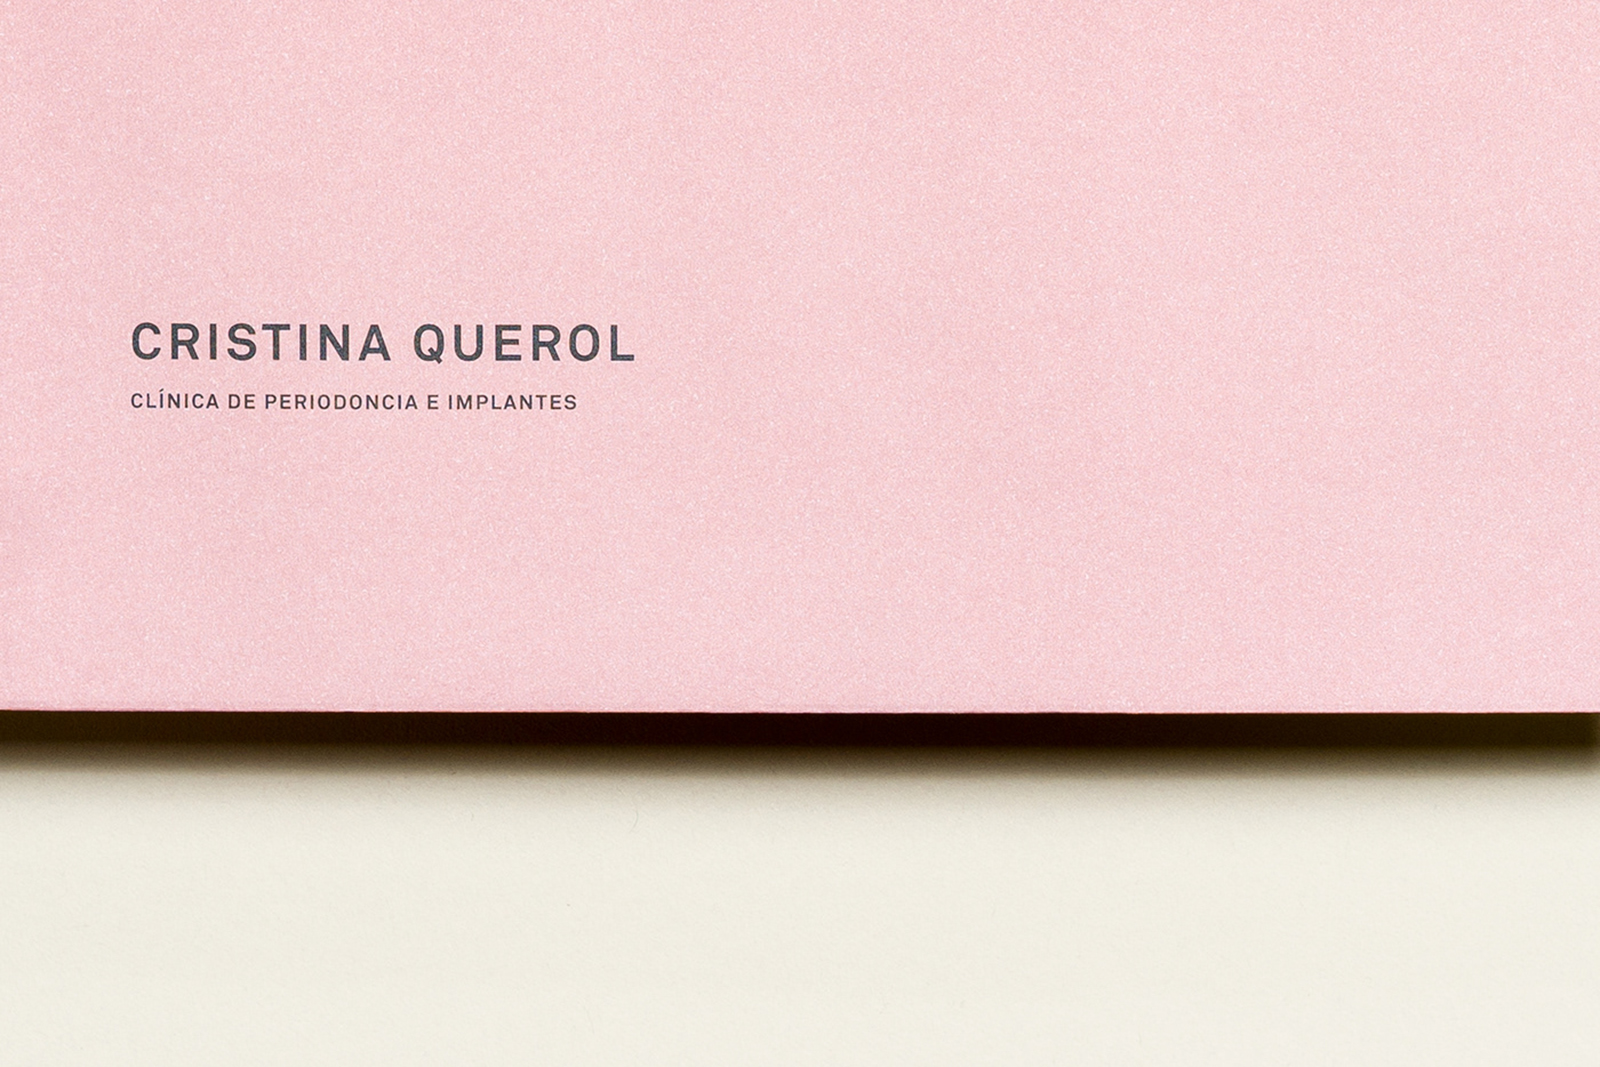 Cristina Querol克里斯蒂娜·奎尔牙科诊所品牌形象设计7